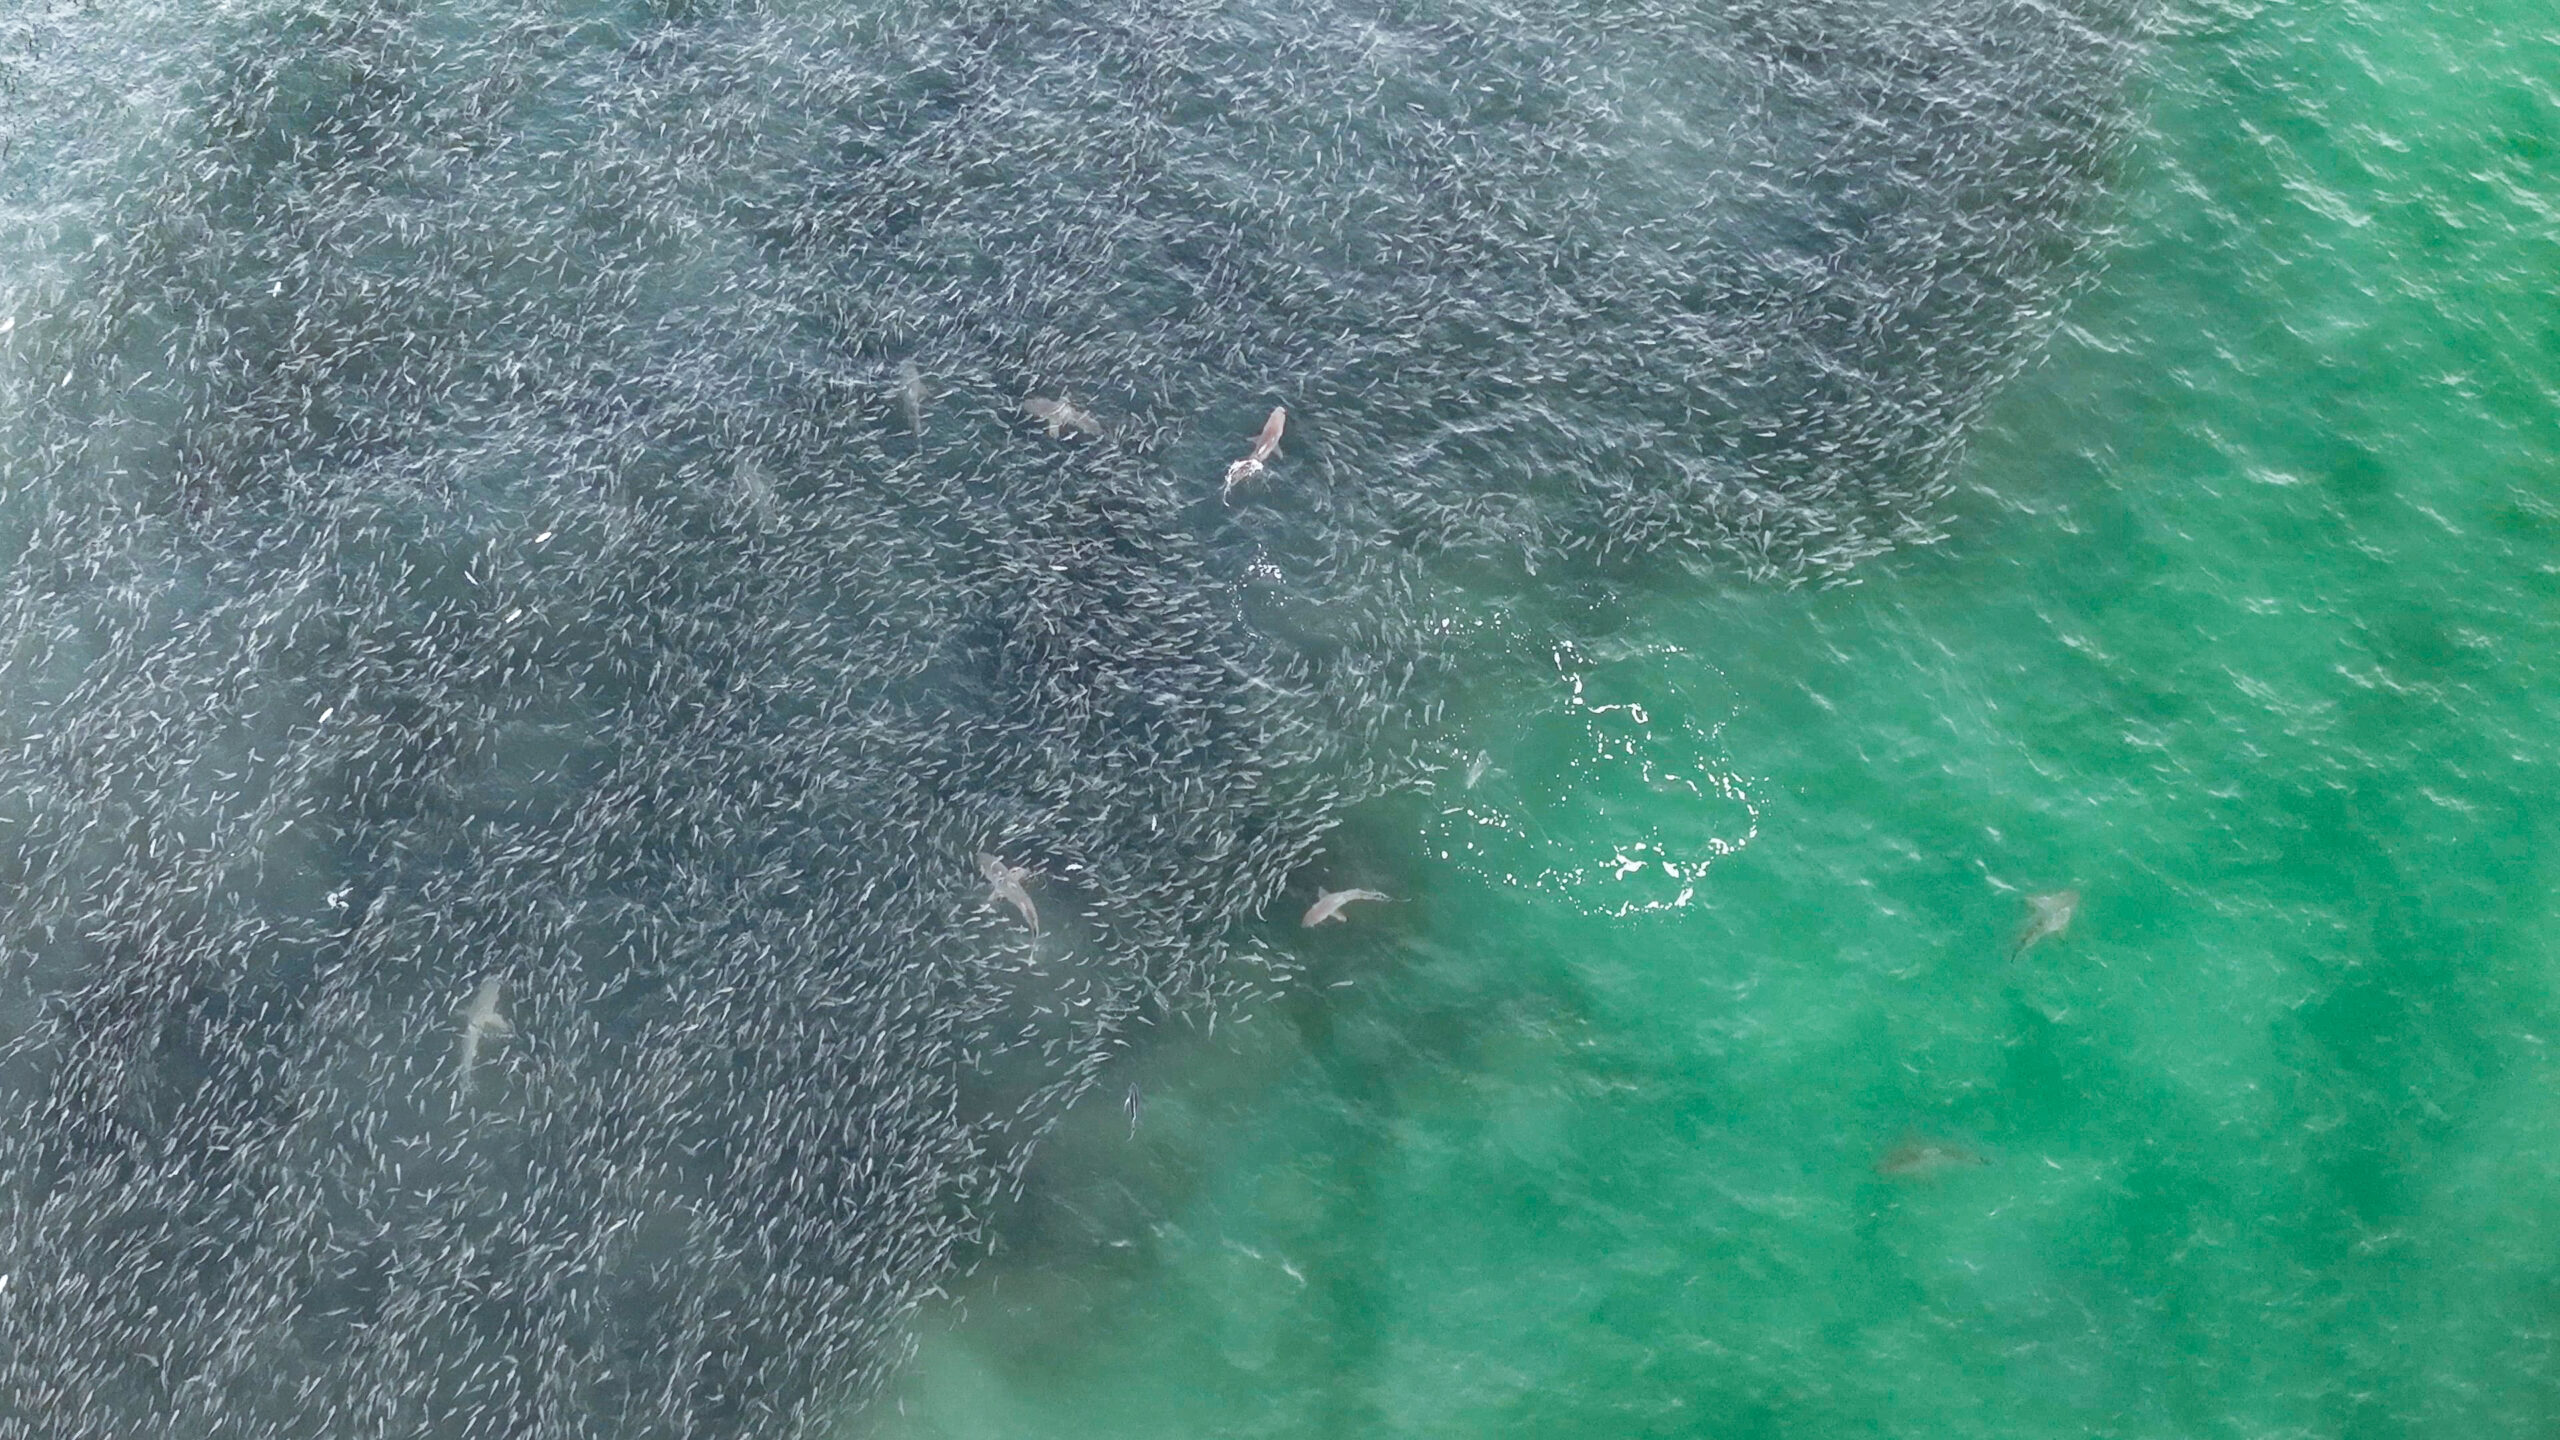 Watch: Blacktip Shark Feeding Frenzy During Florida’s Fall Mullet Run